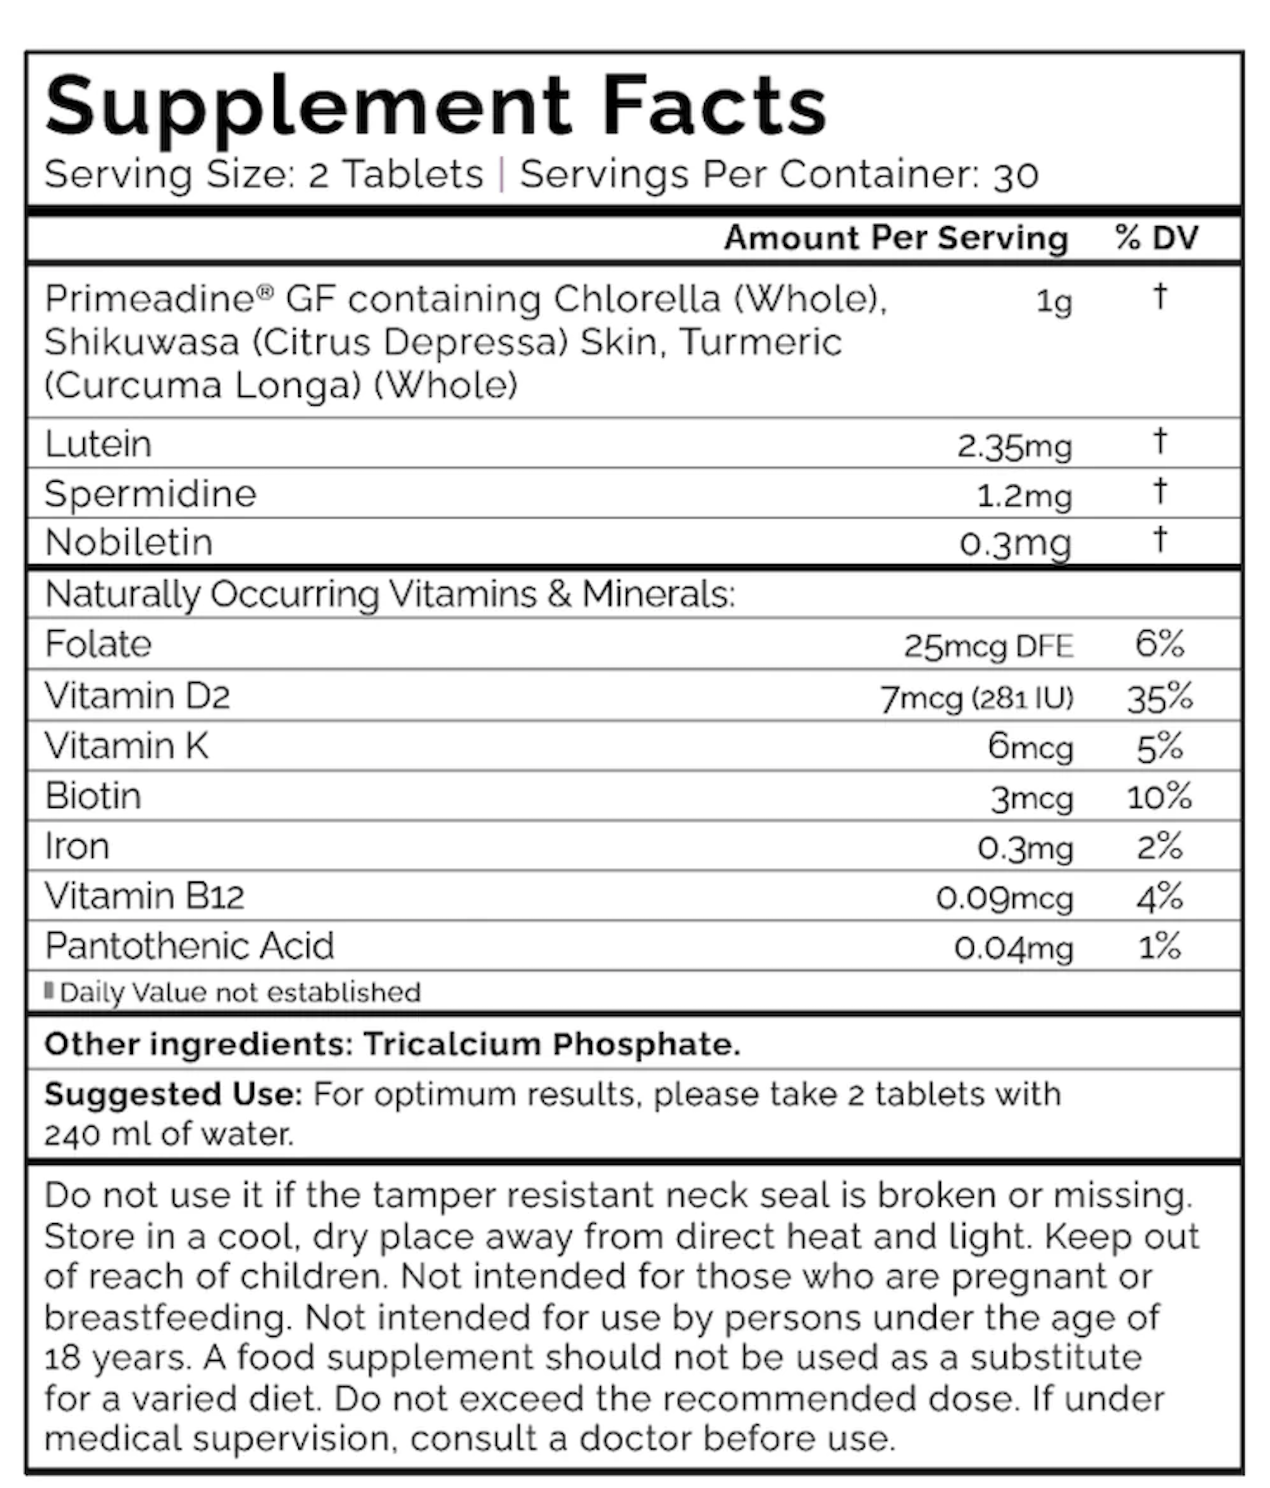 Primeadine® Original & GF Spermidine Supplement Mixed - 3-Bottle Bundle / 90 Day Supply